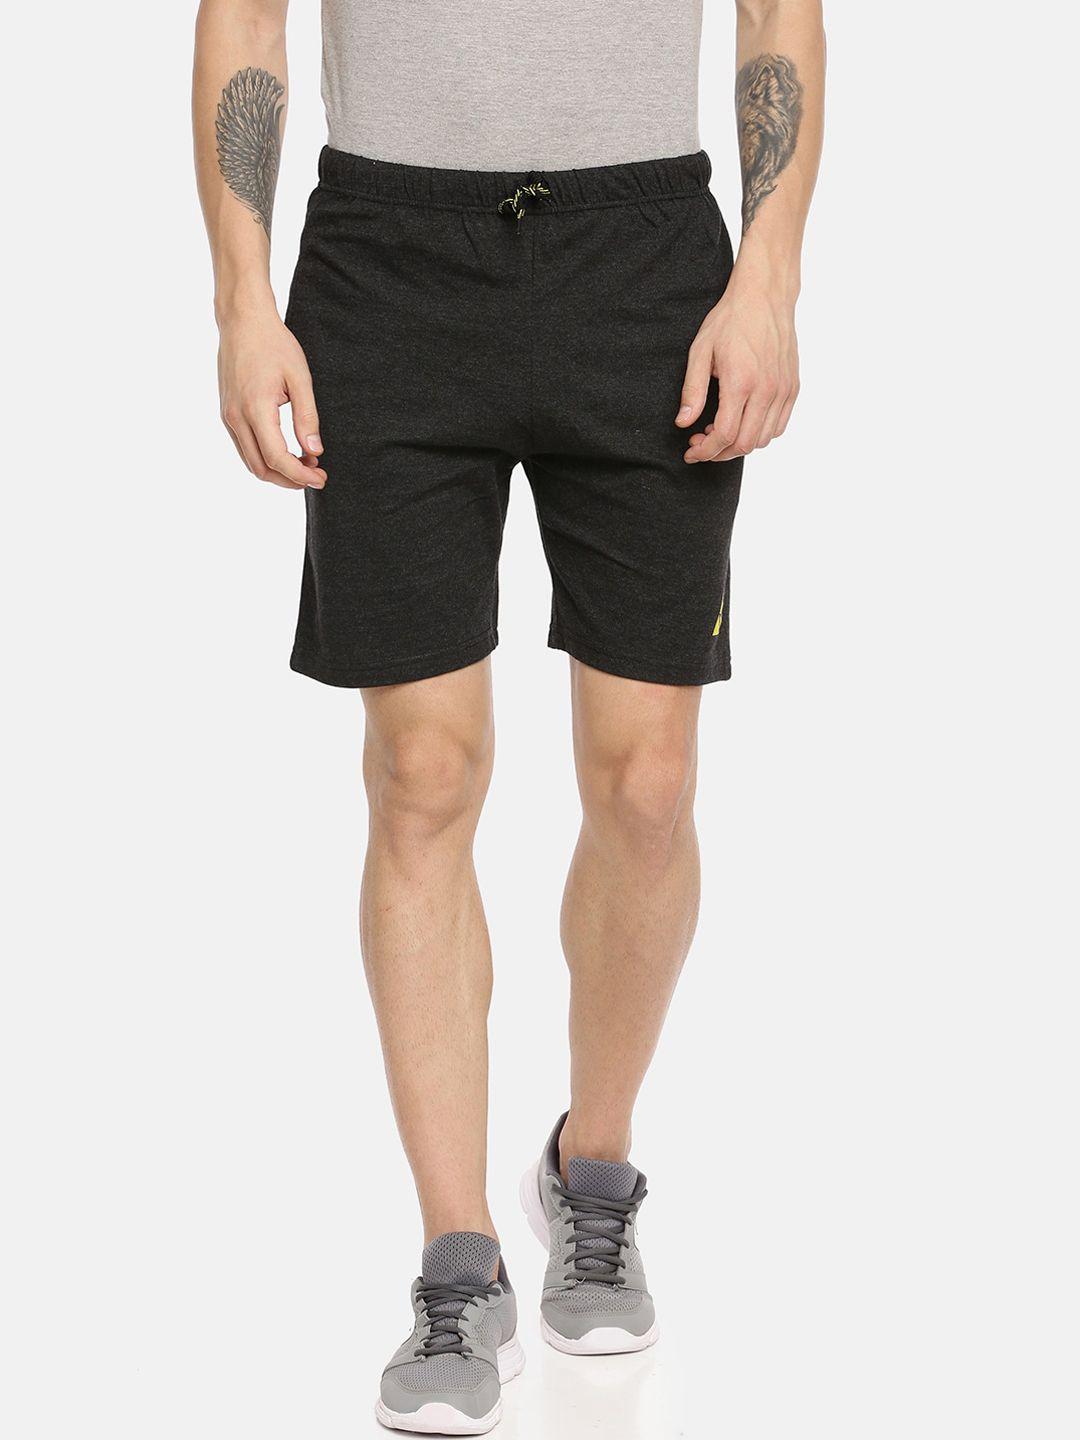 ardeur men charcoal grey cotton sports shorts